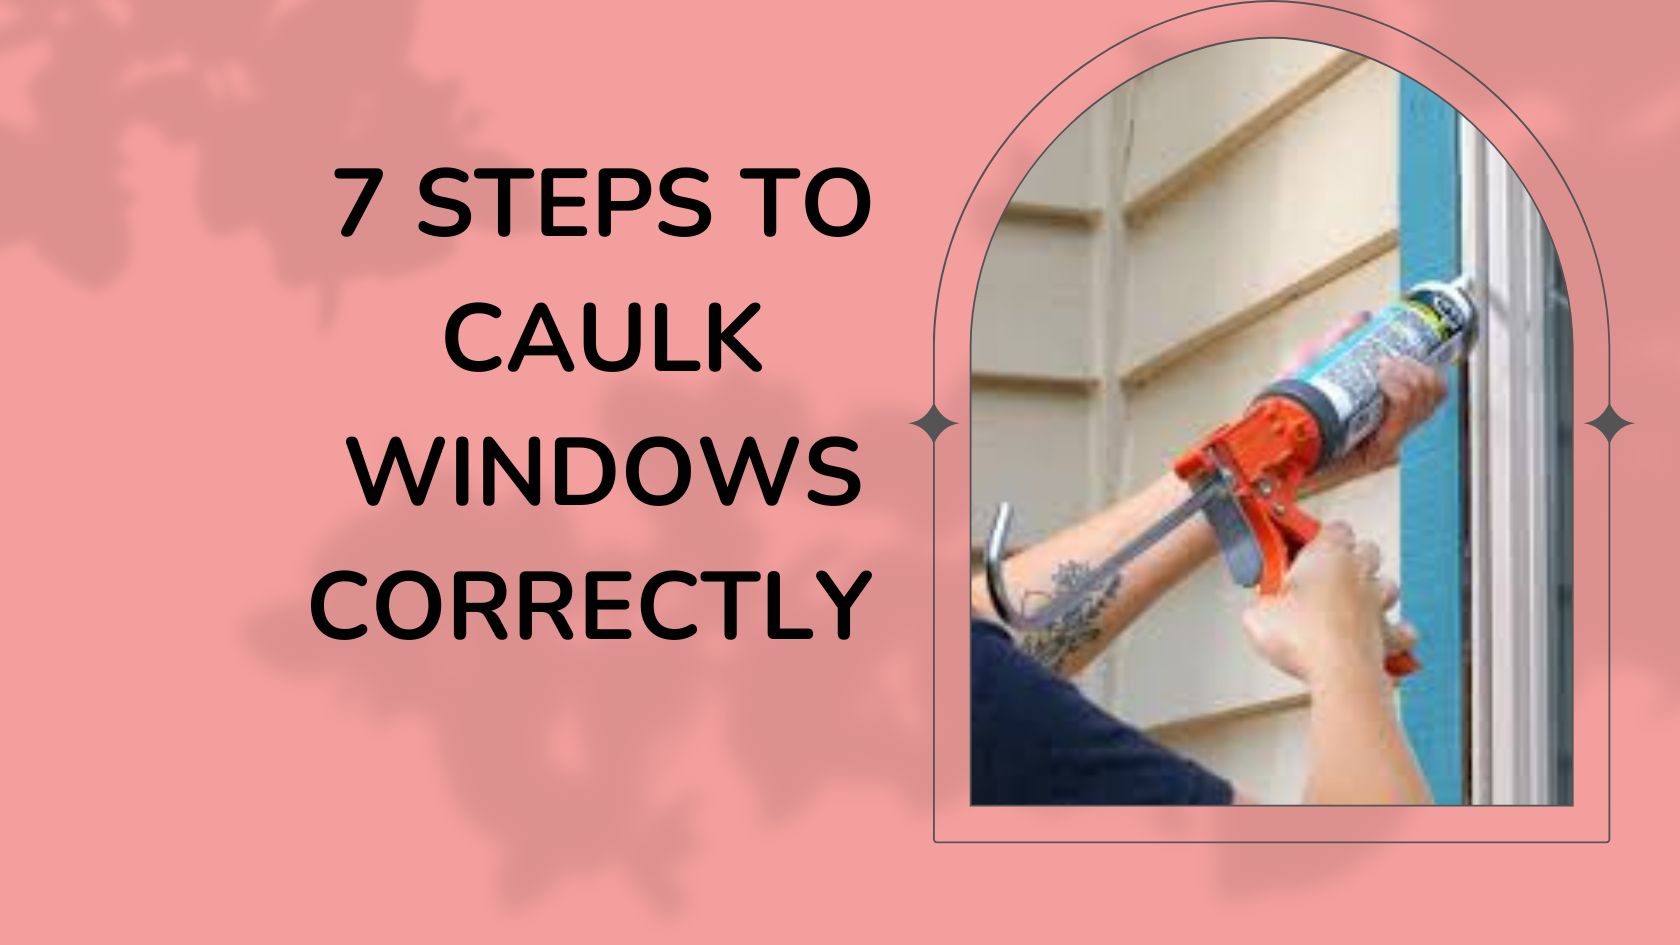 7-Steps-to-caulk-windows-correctly-.jpg